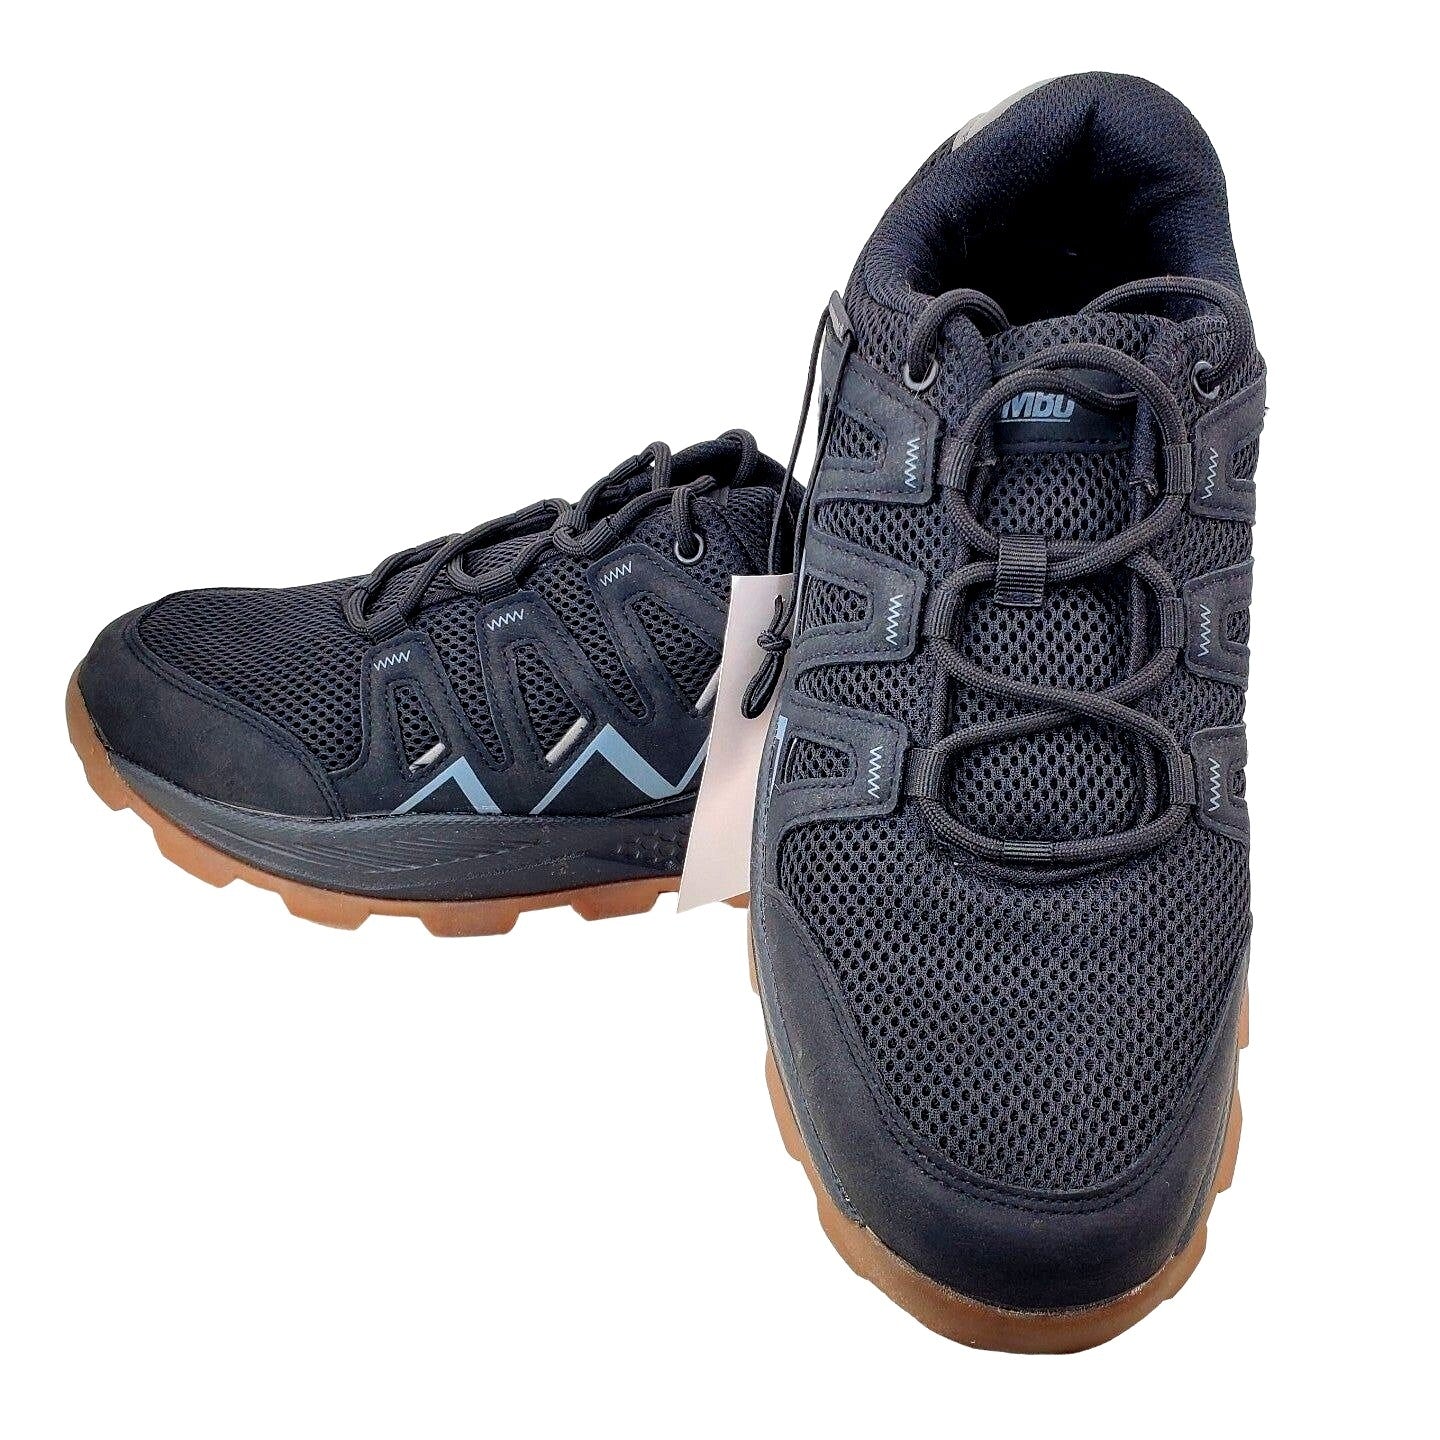 KHOMBU Sneakers Men's All Terrain Hiker Rugged Outdoor Activewear Shoes